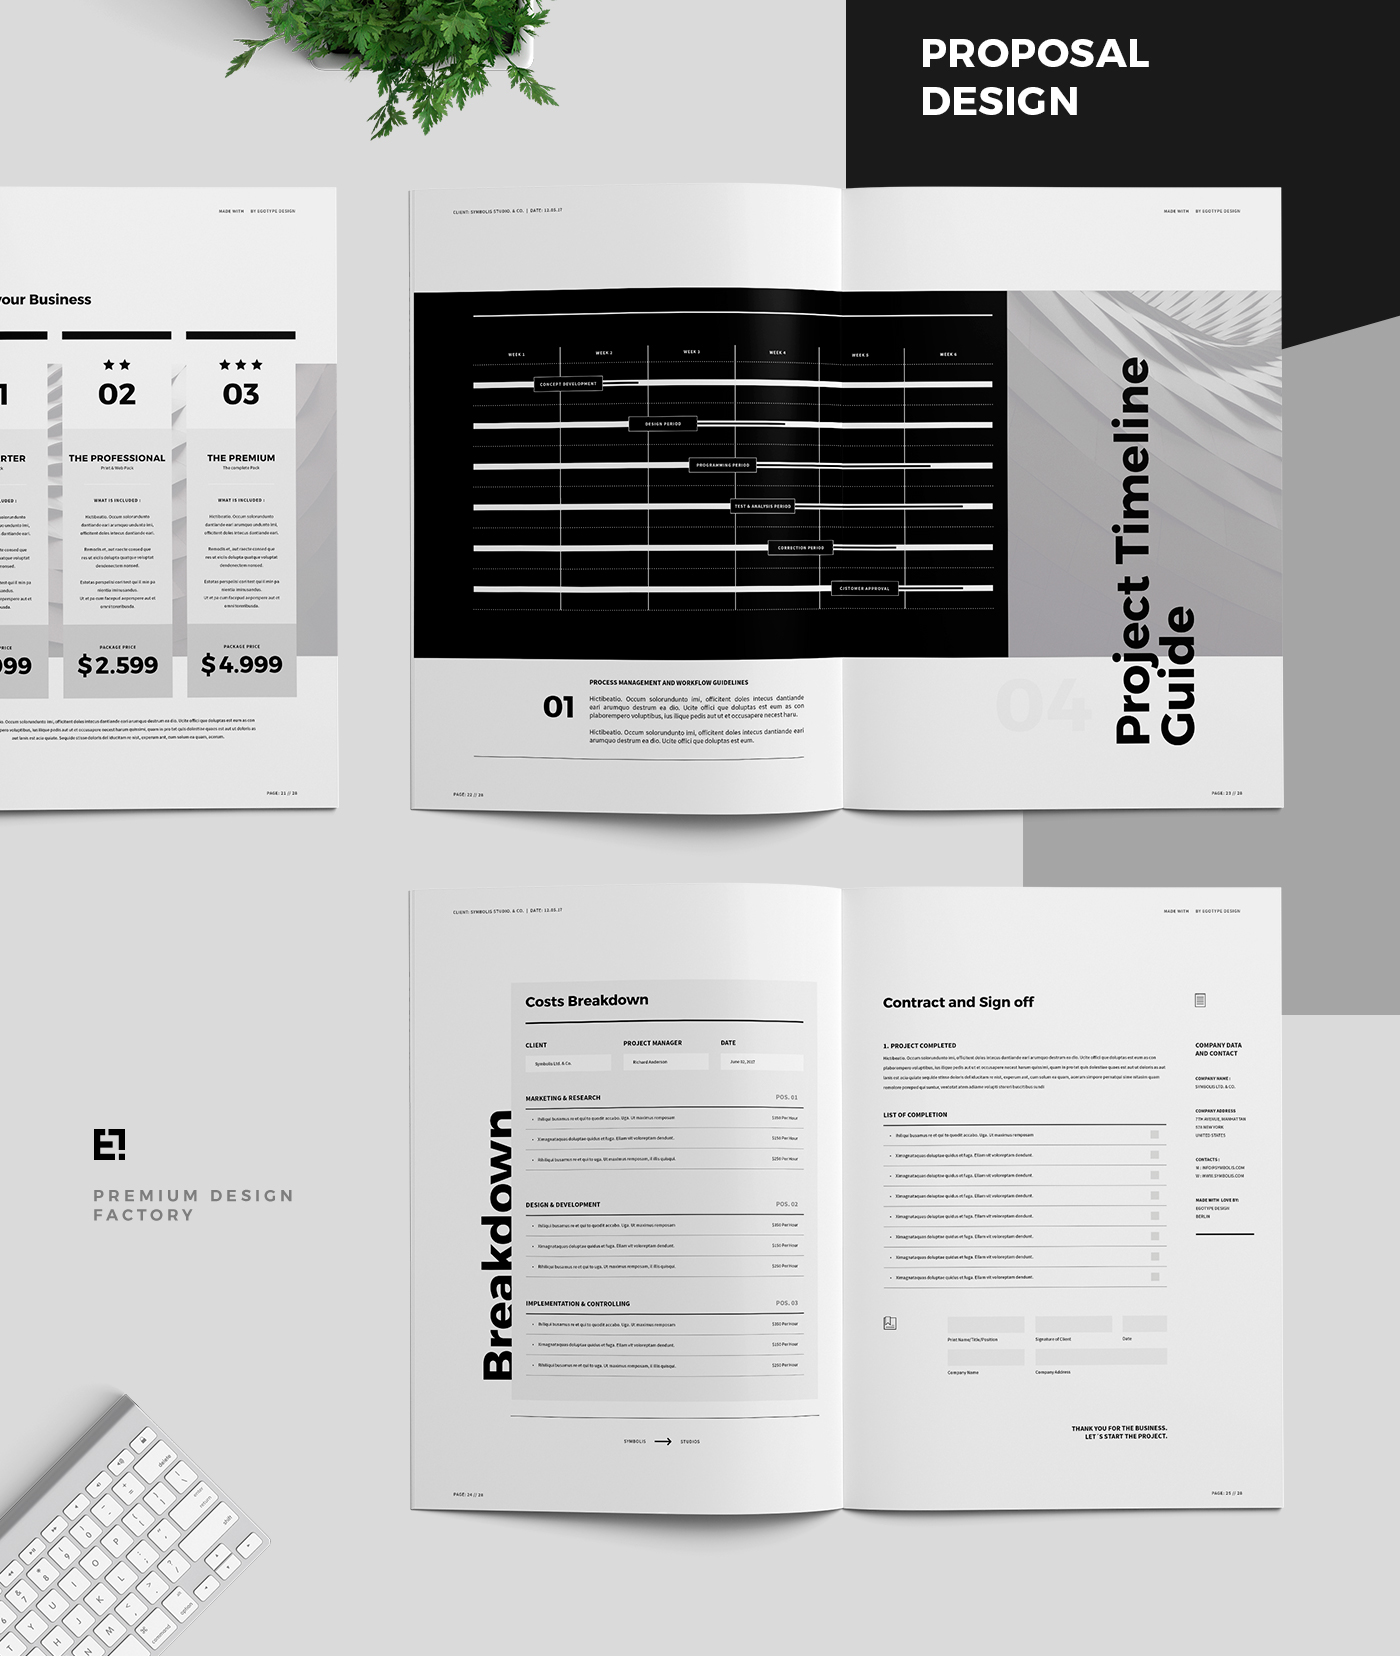 Proposal design template company brief Project corporate studio business